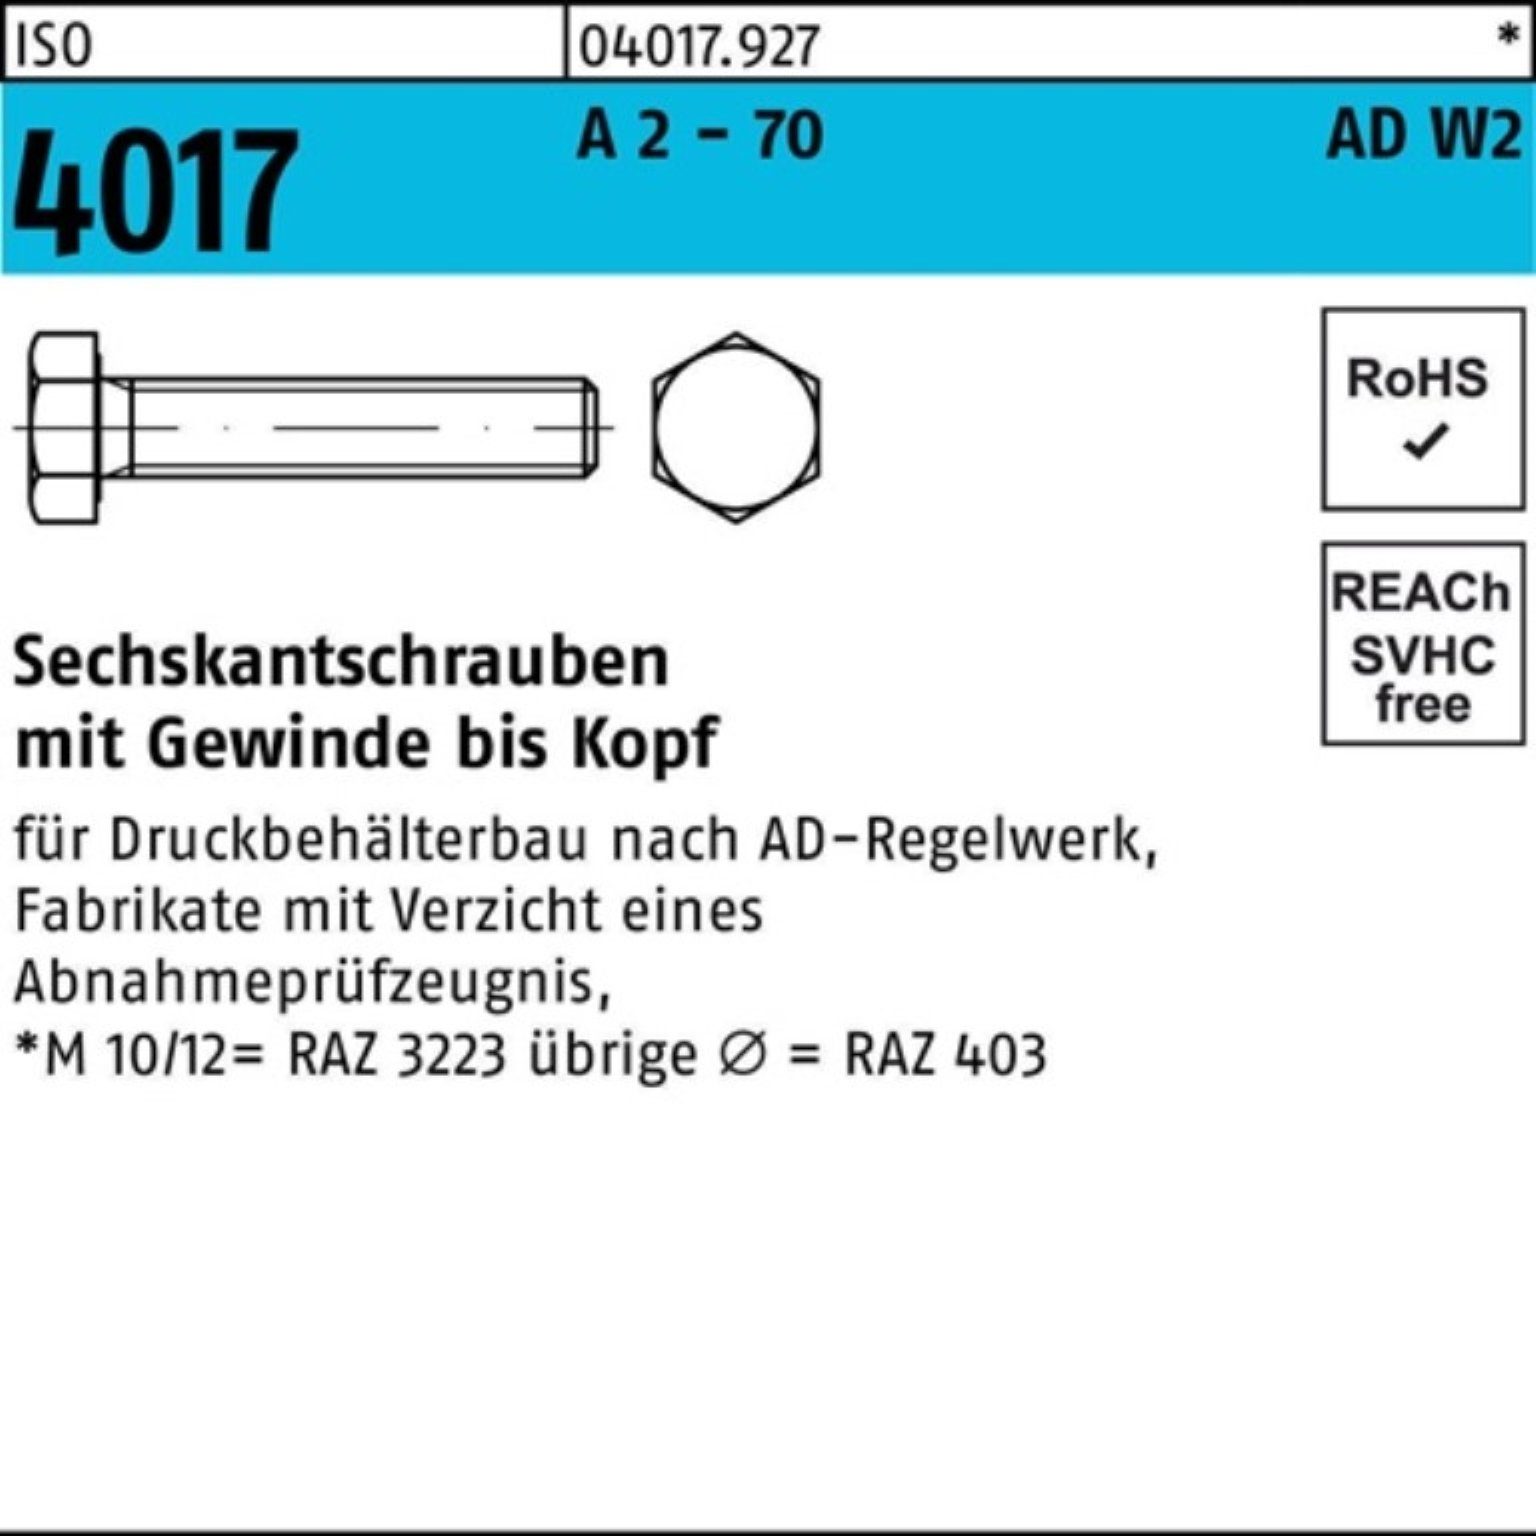 Bufab Sechskantschraube 100er Pack Sechskantschraube ISO 4017 VG M16x 35 A 2 - 70 AD-W2 25 St